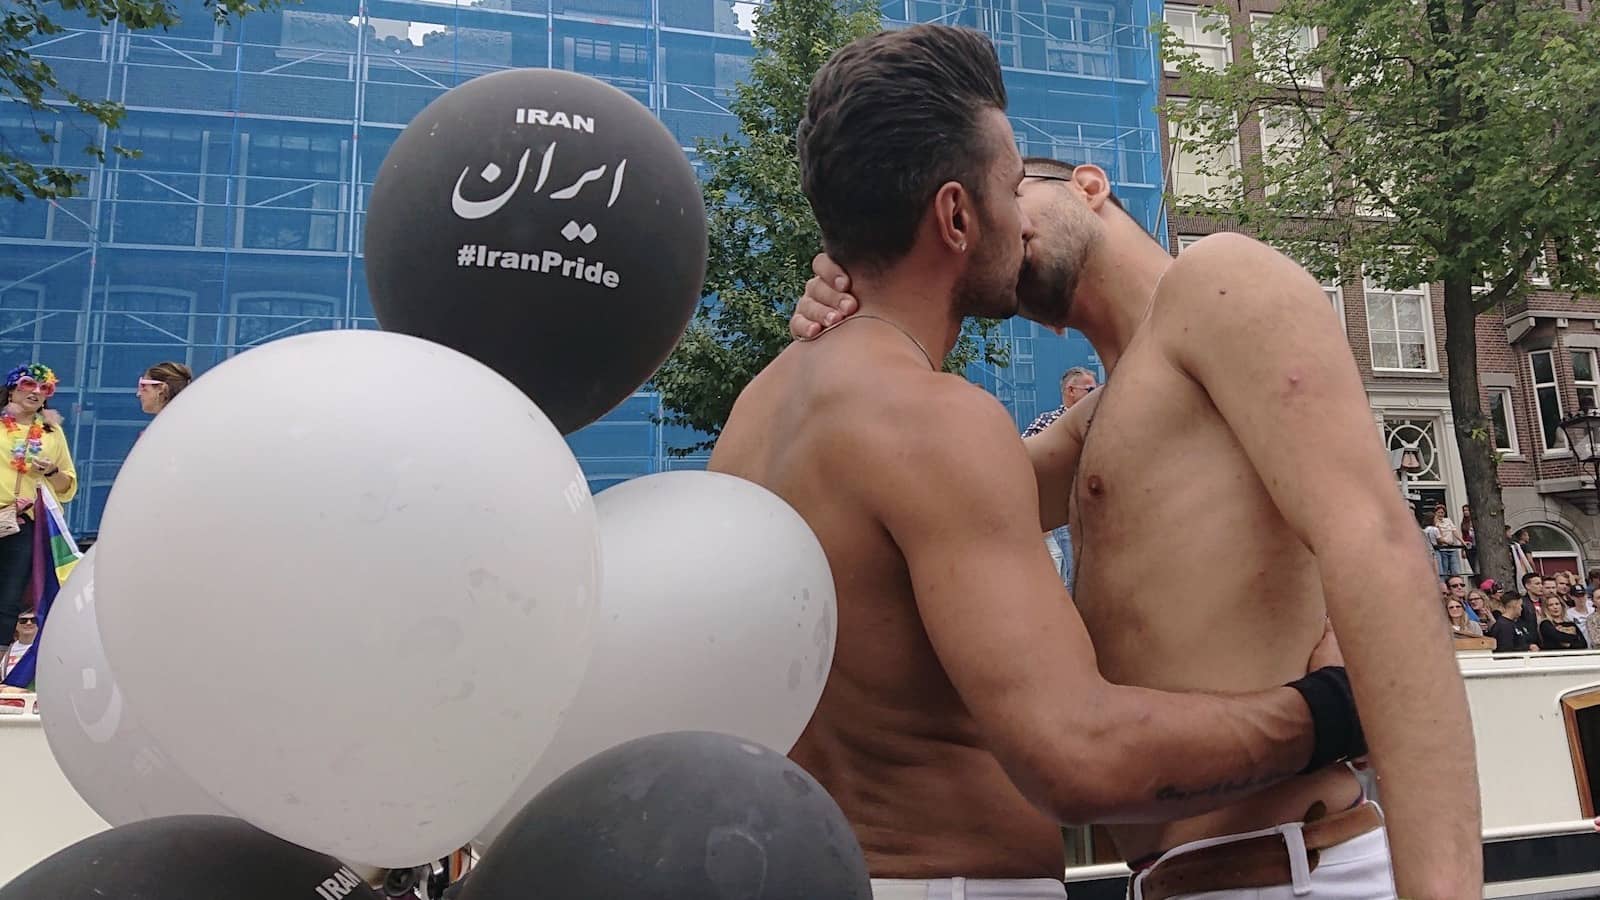 Gays iranianos se beijando no Pride Amsterdam